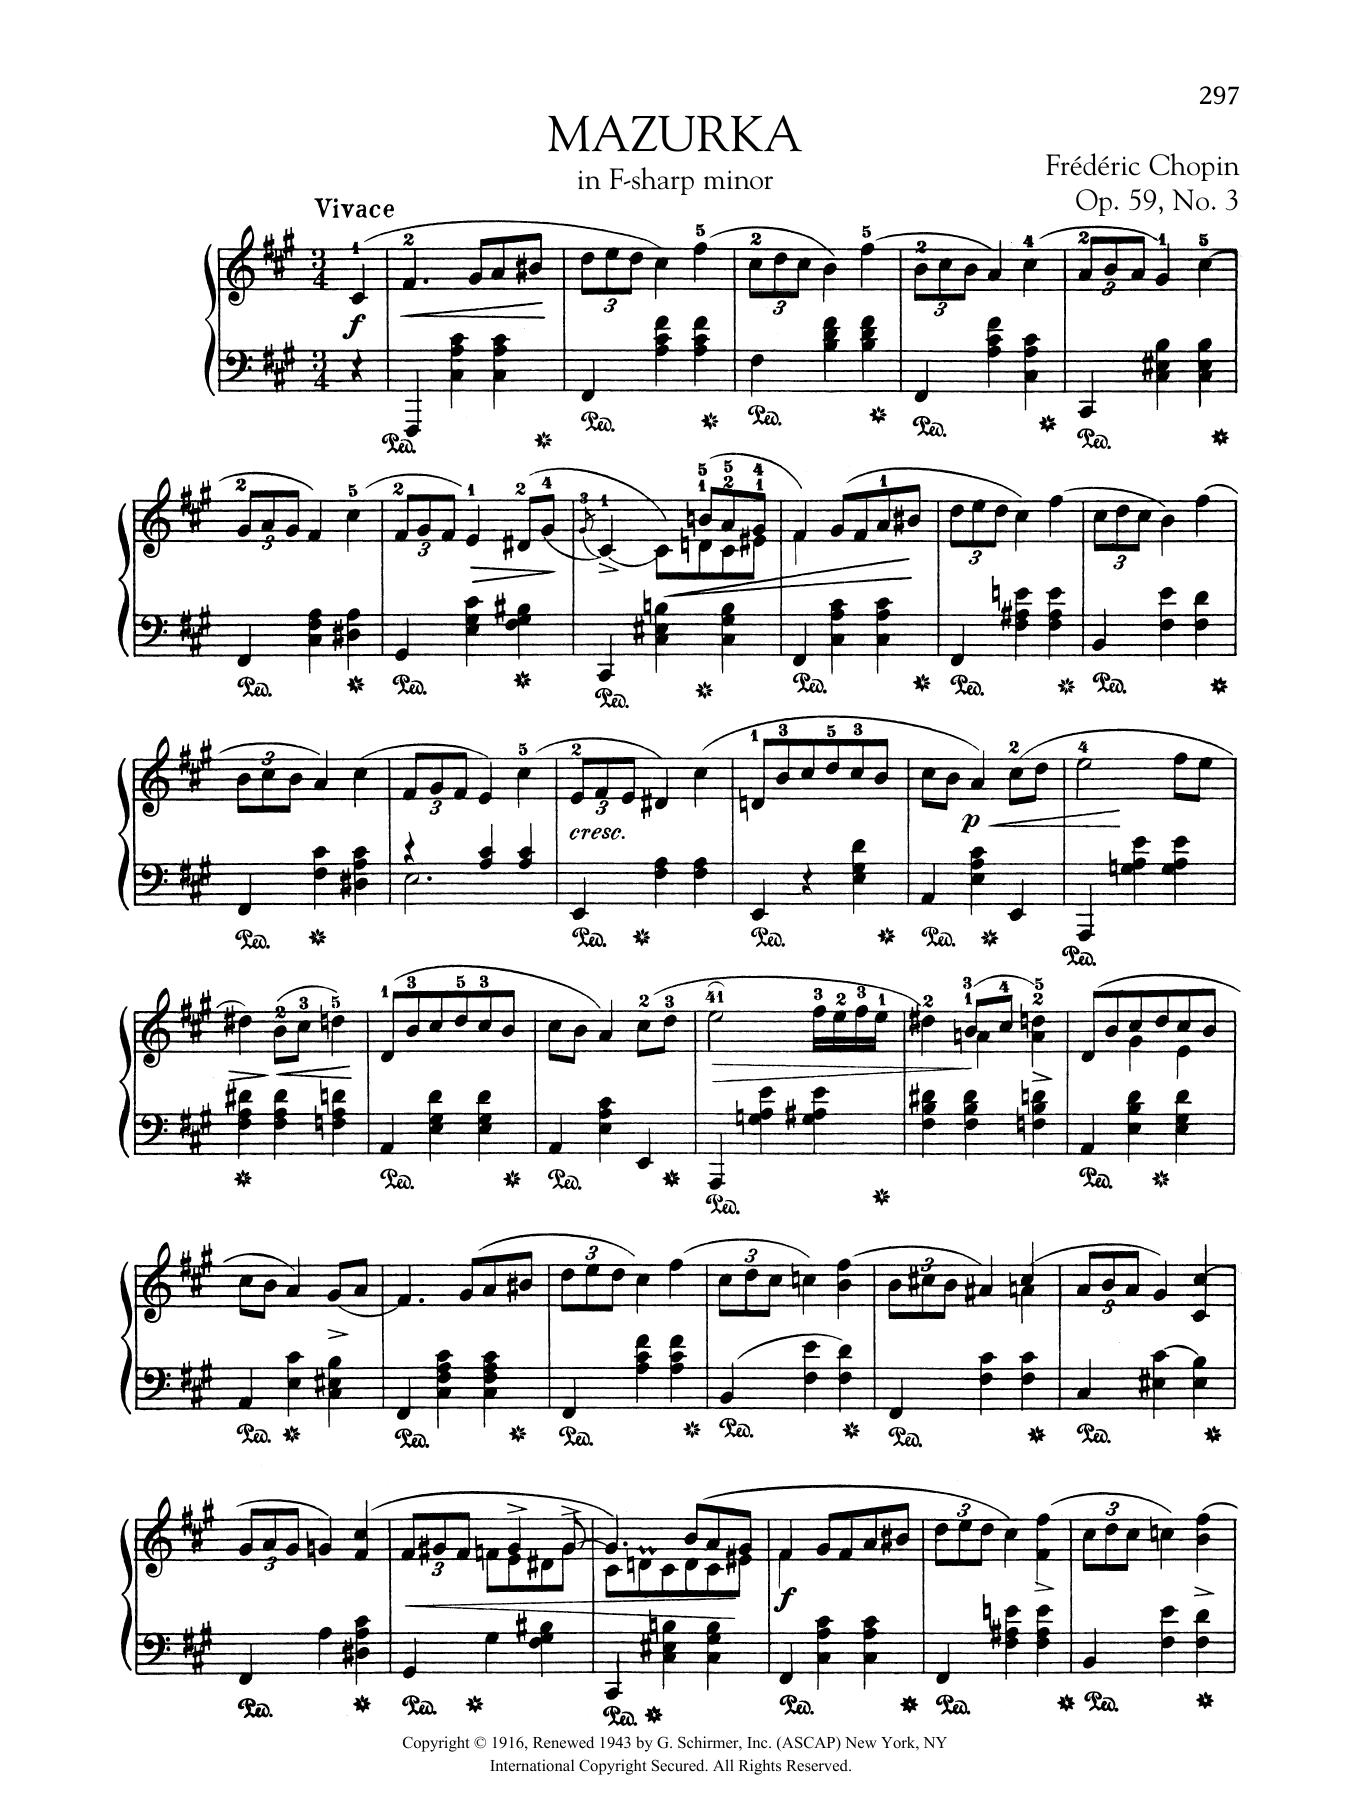 Download Frederic Chopin Mazurka in F-sharp minor, Op. 59, No. 3 Sheet Music